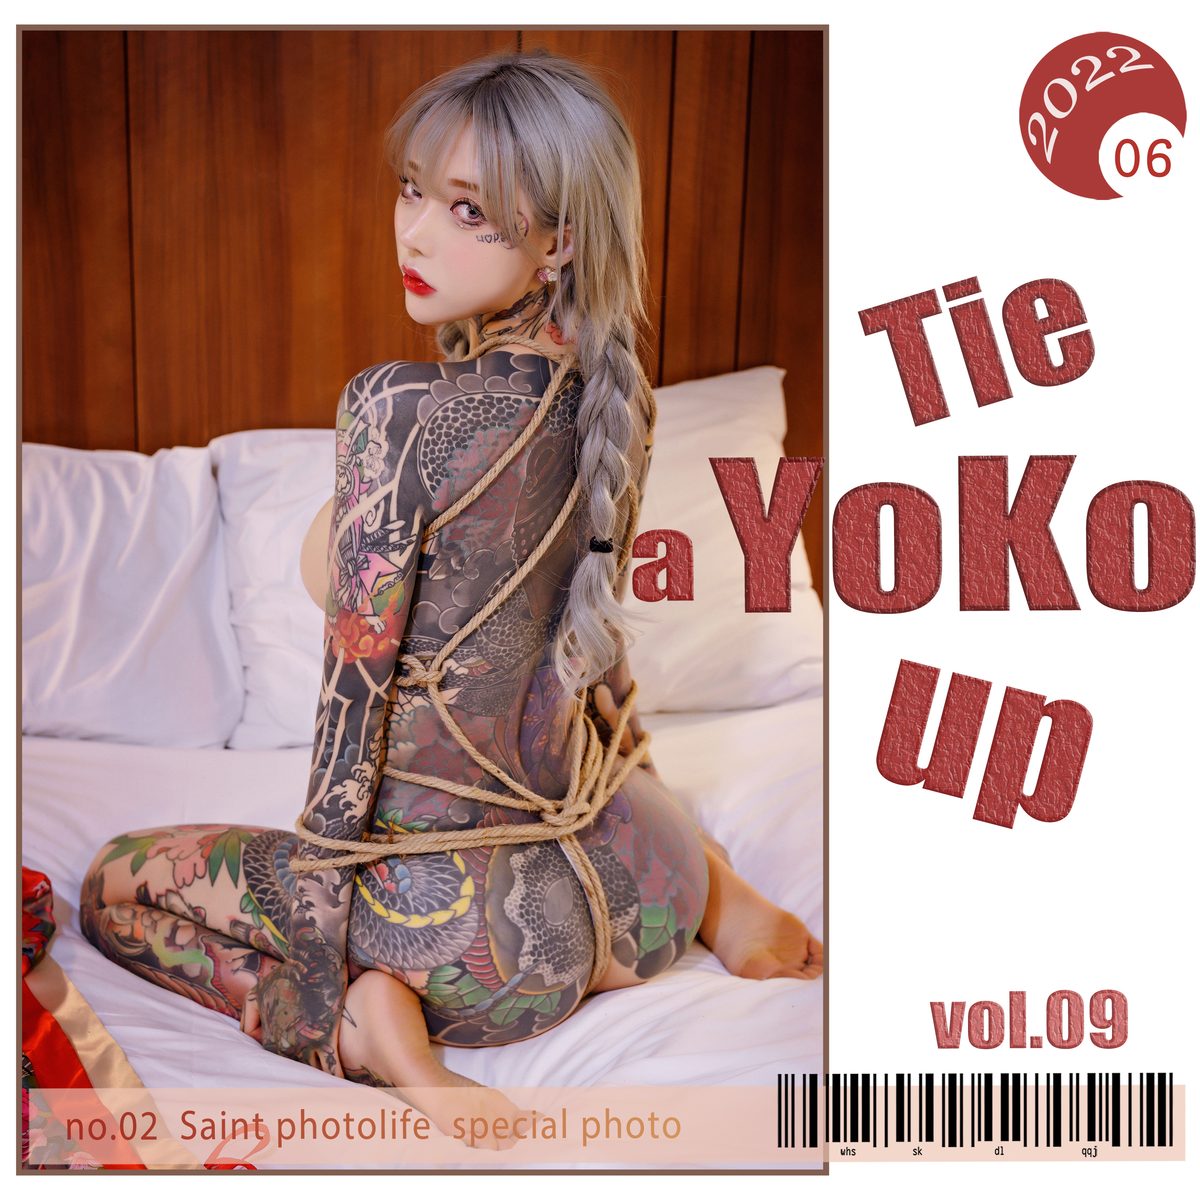 SaintPhotoLife Yoko Vol 09 Tied Up 0064 1736699035.jpg